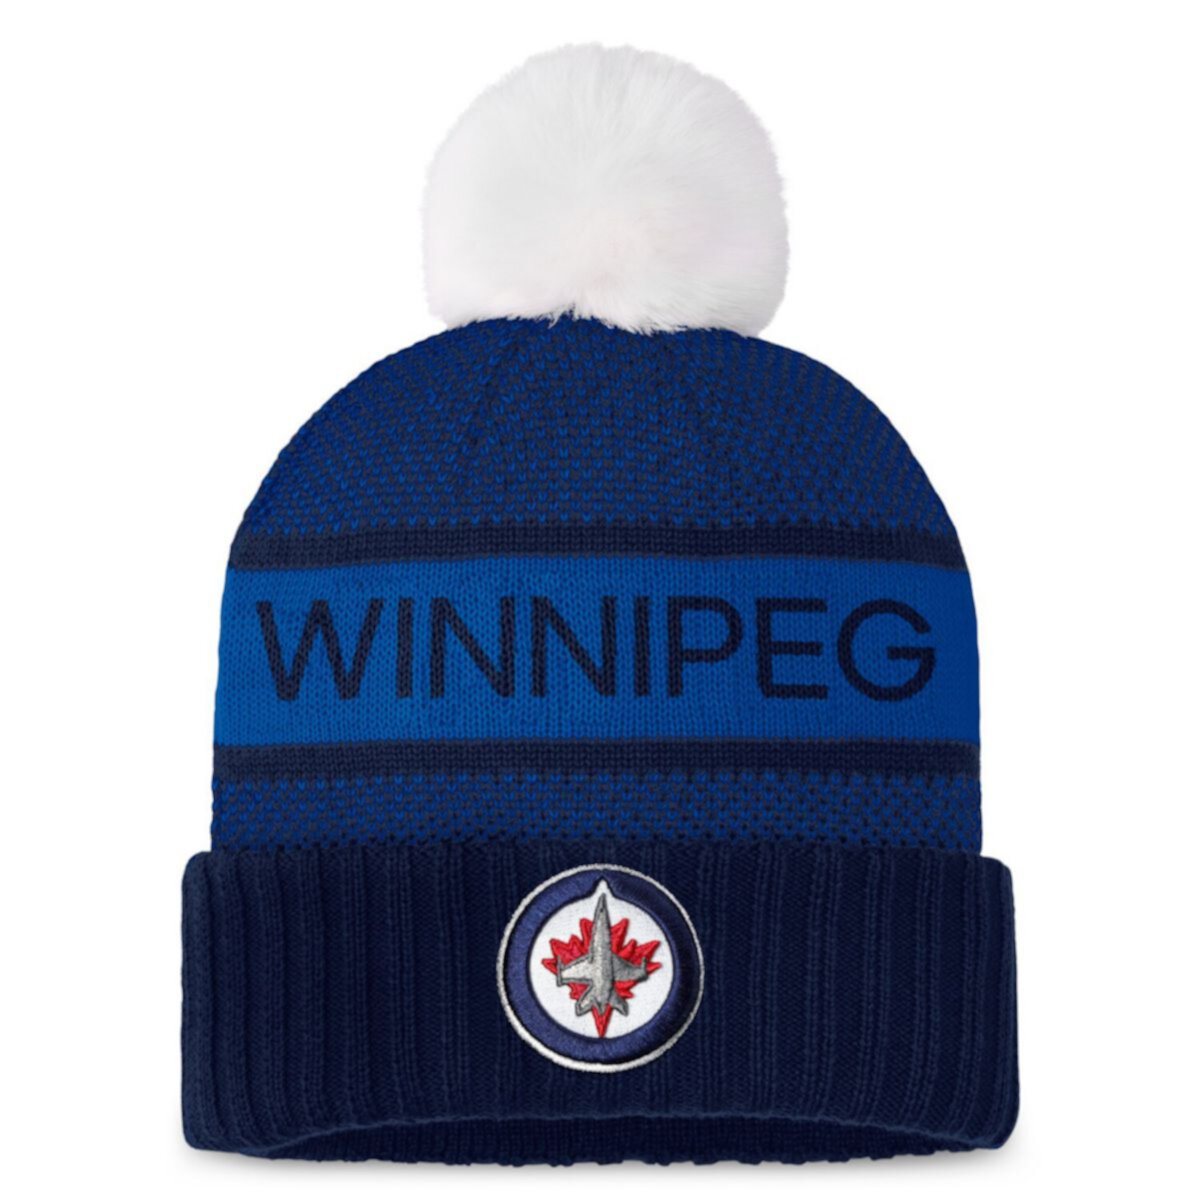 Women's Fanatics Branded Navy/Blue Winnipeg Jets Authentic Pro Rink Cuffed Knit Hat with Pom Fanatics